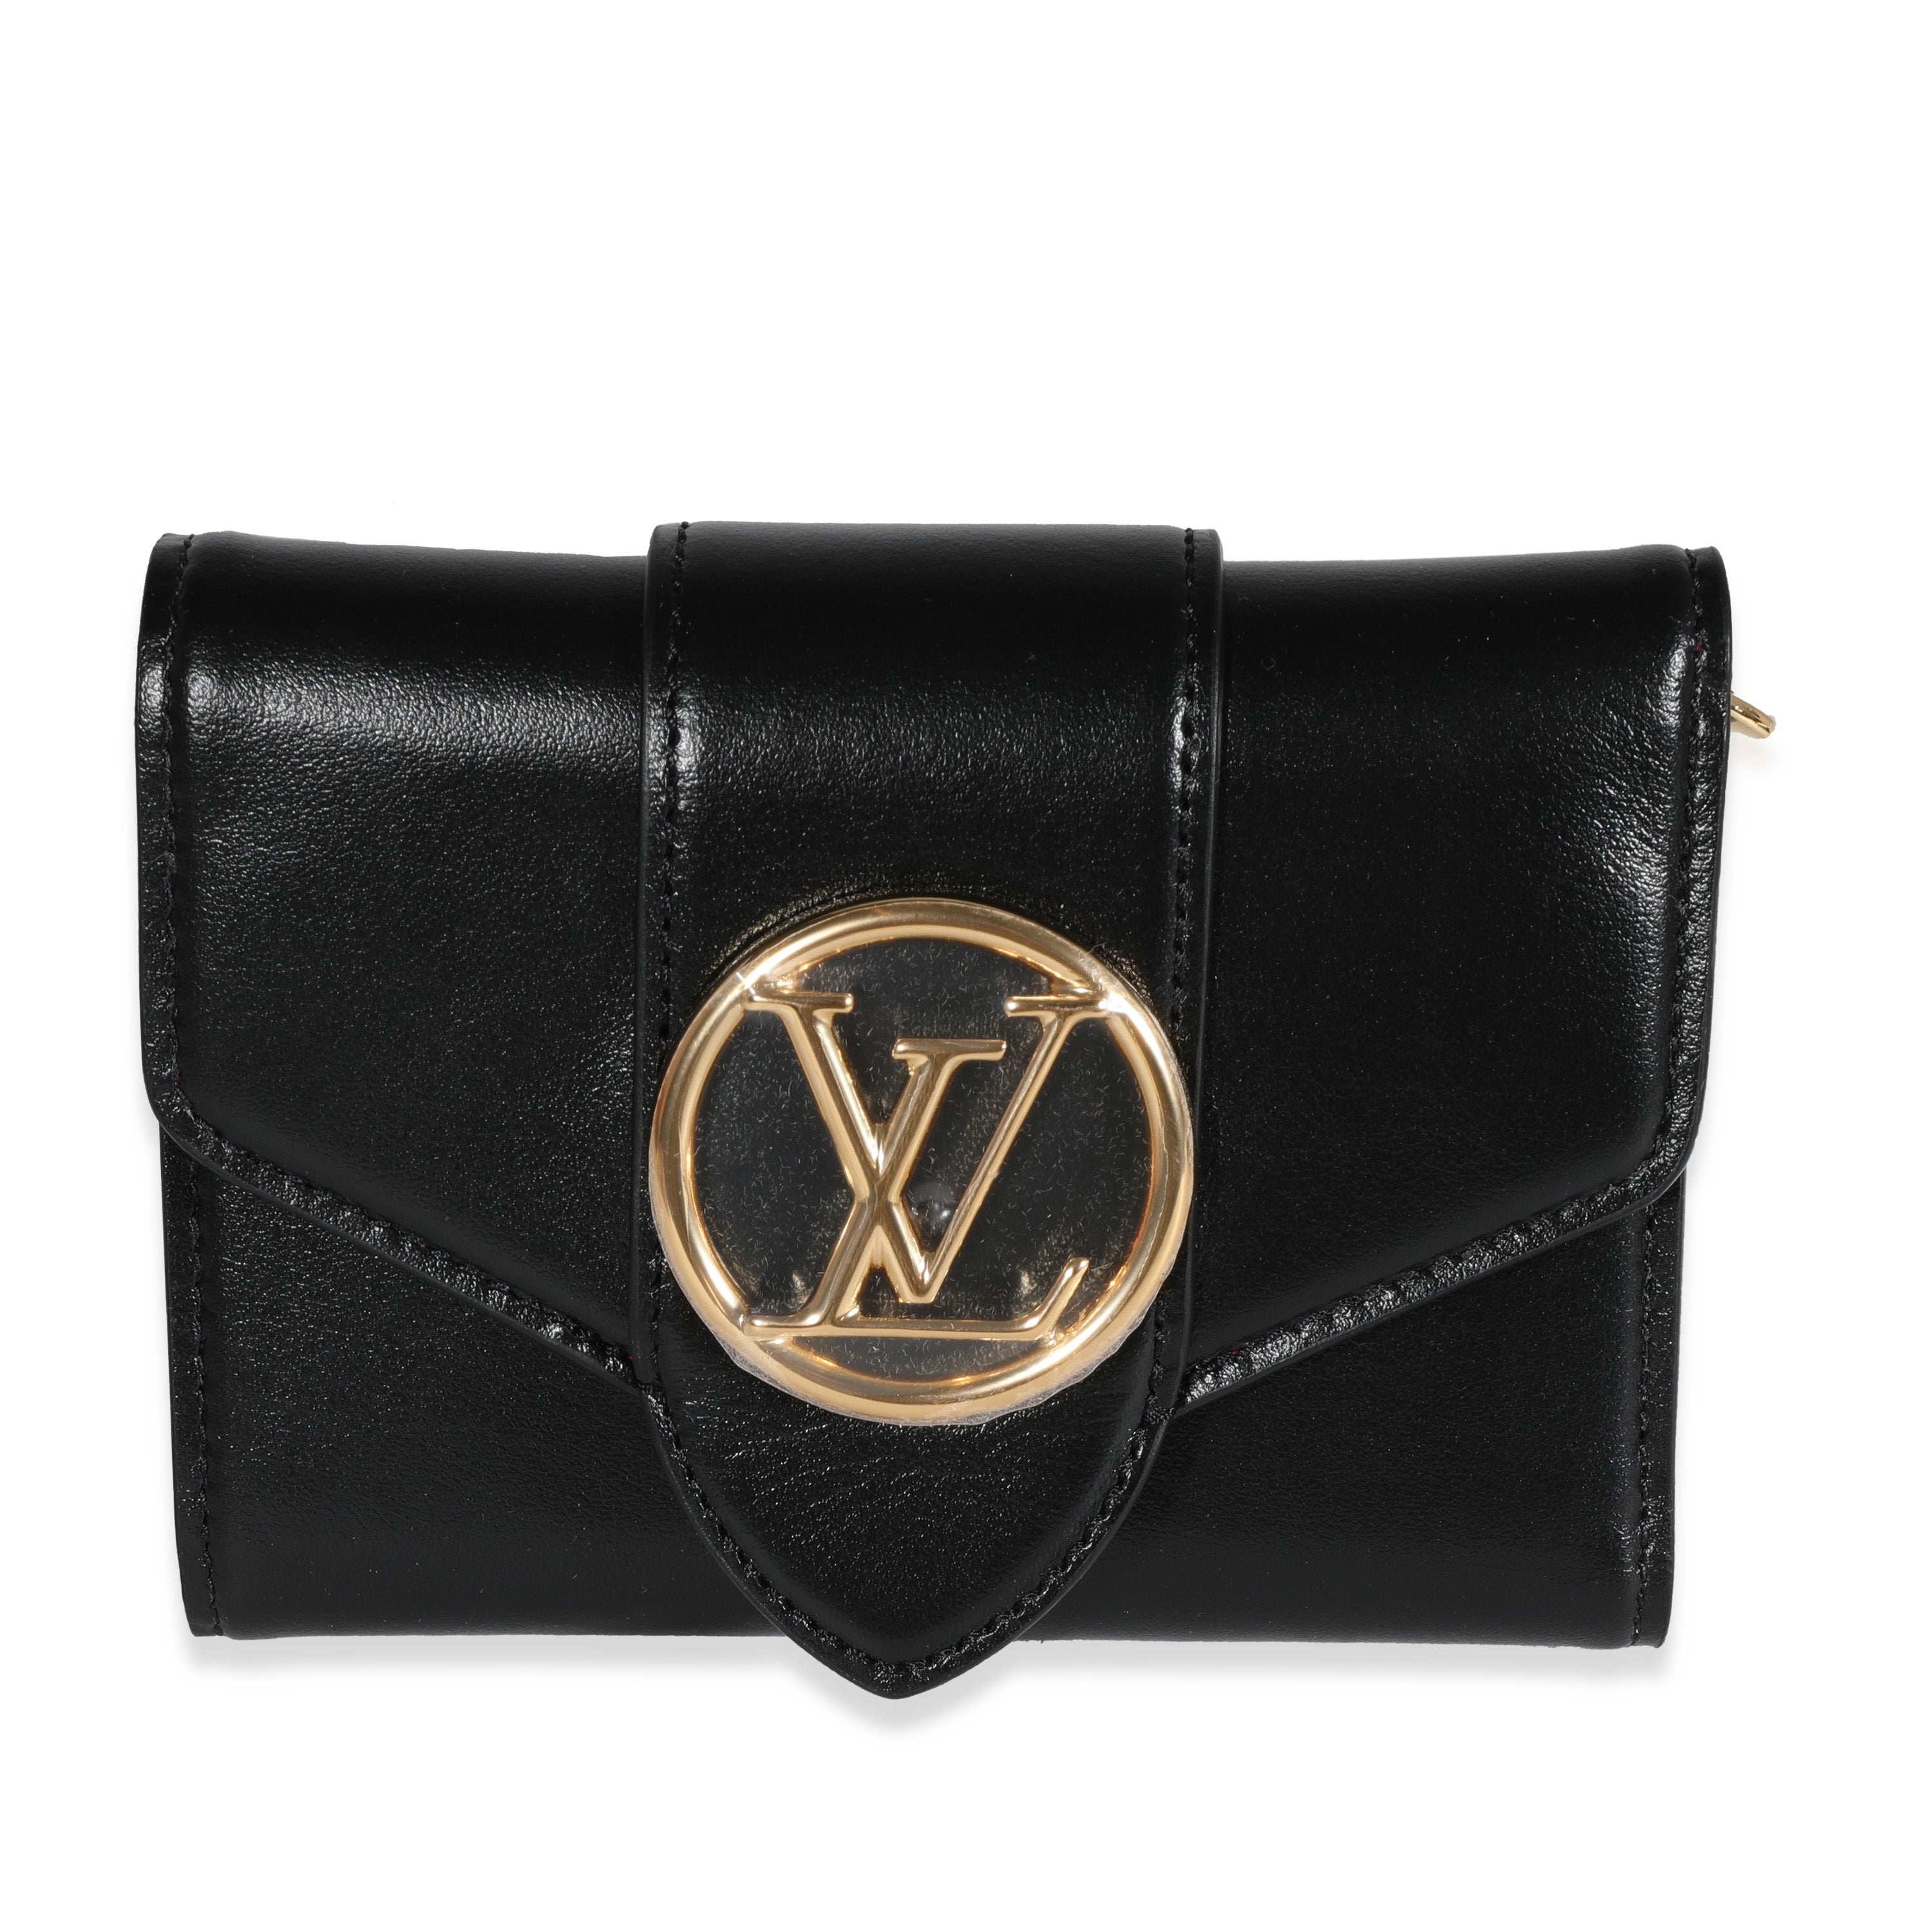 Louis Vuitton - Authenticated Handbag - Patent Leather Gold Plain for Women, Very Good Condition